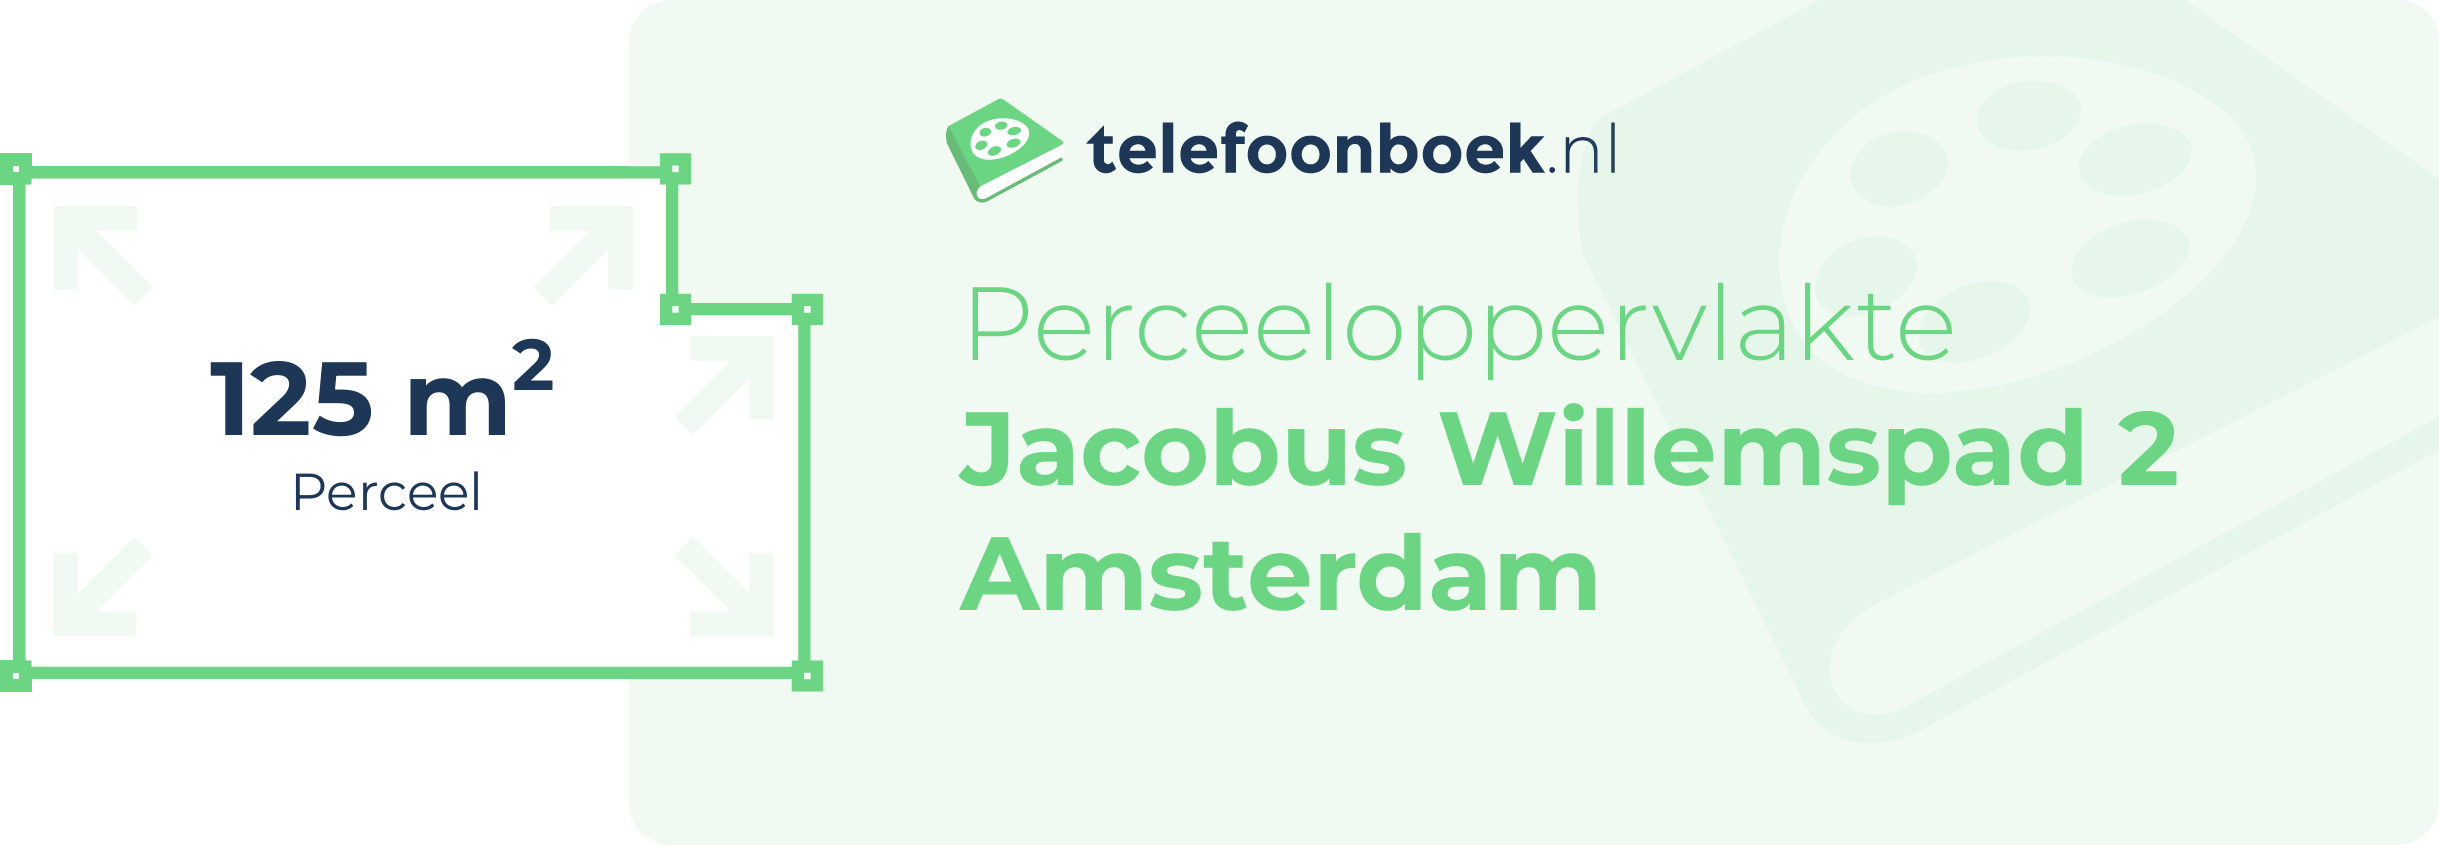 Perceeloppervlakte Jacobus Willemspad 2 Amsterdam